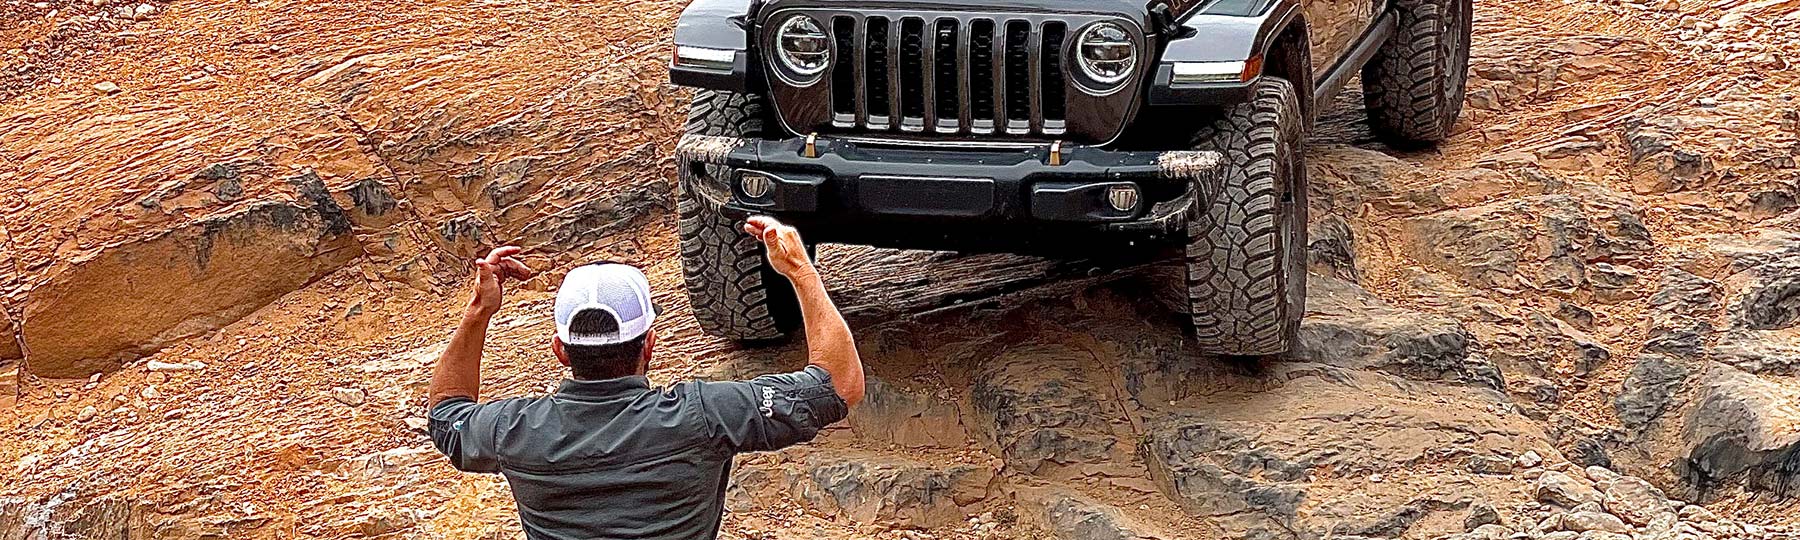 guiding jeep down trail